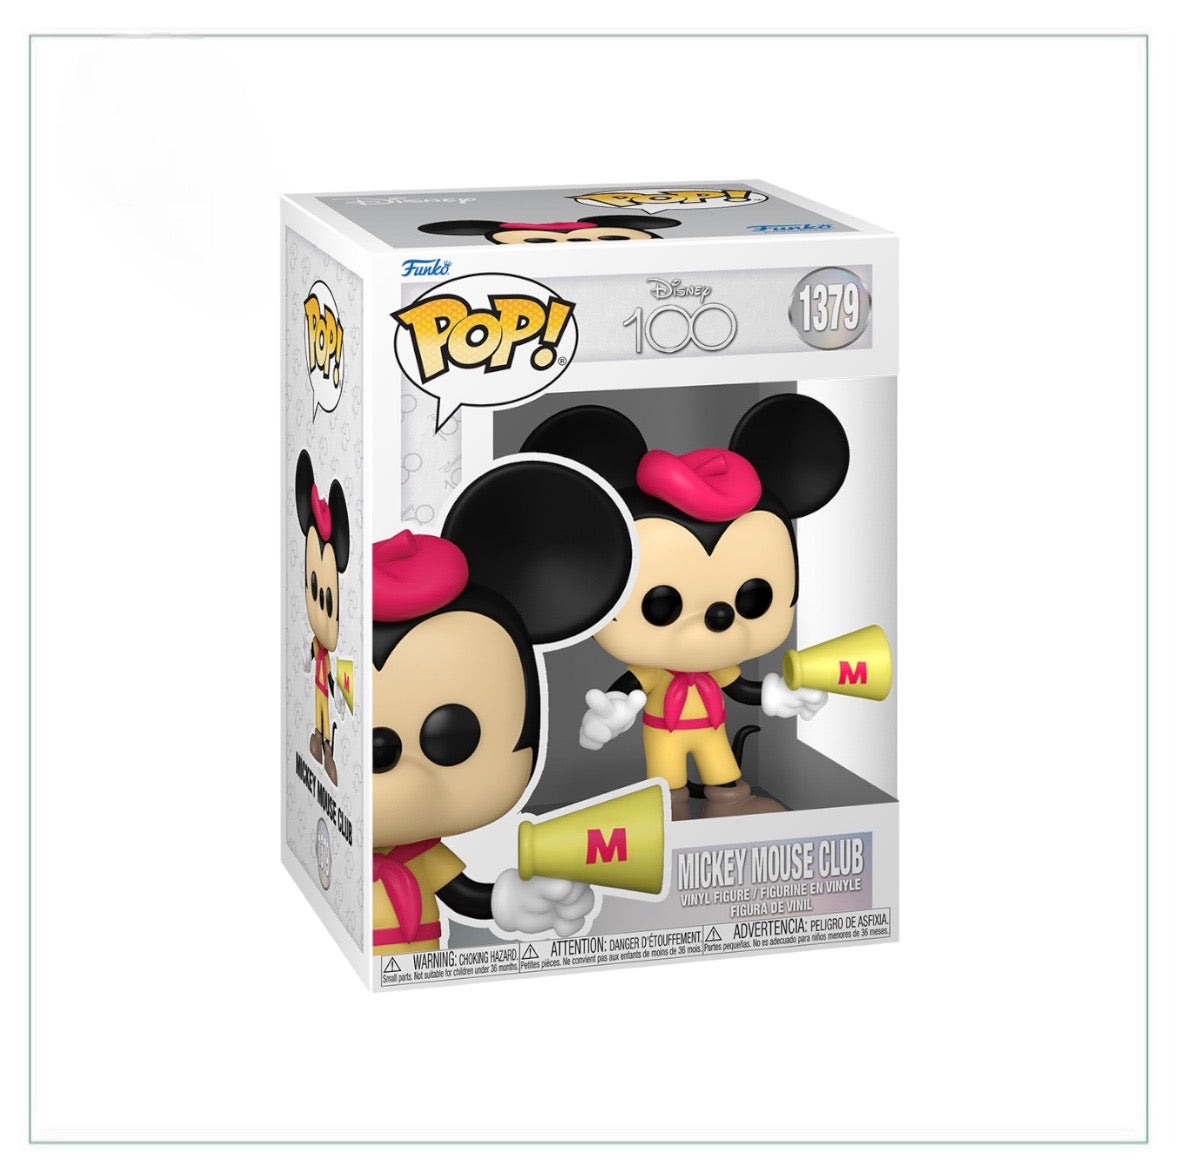 Mickey Mouse Club #1379 Funko Pop! - Disney 100